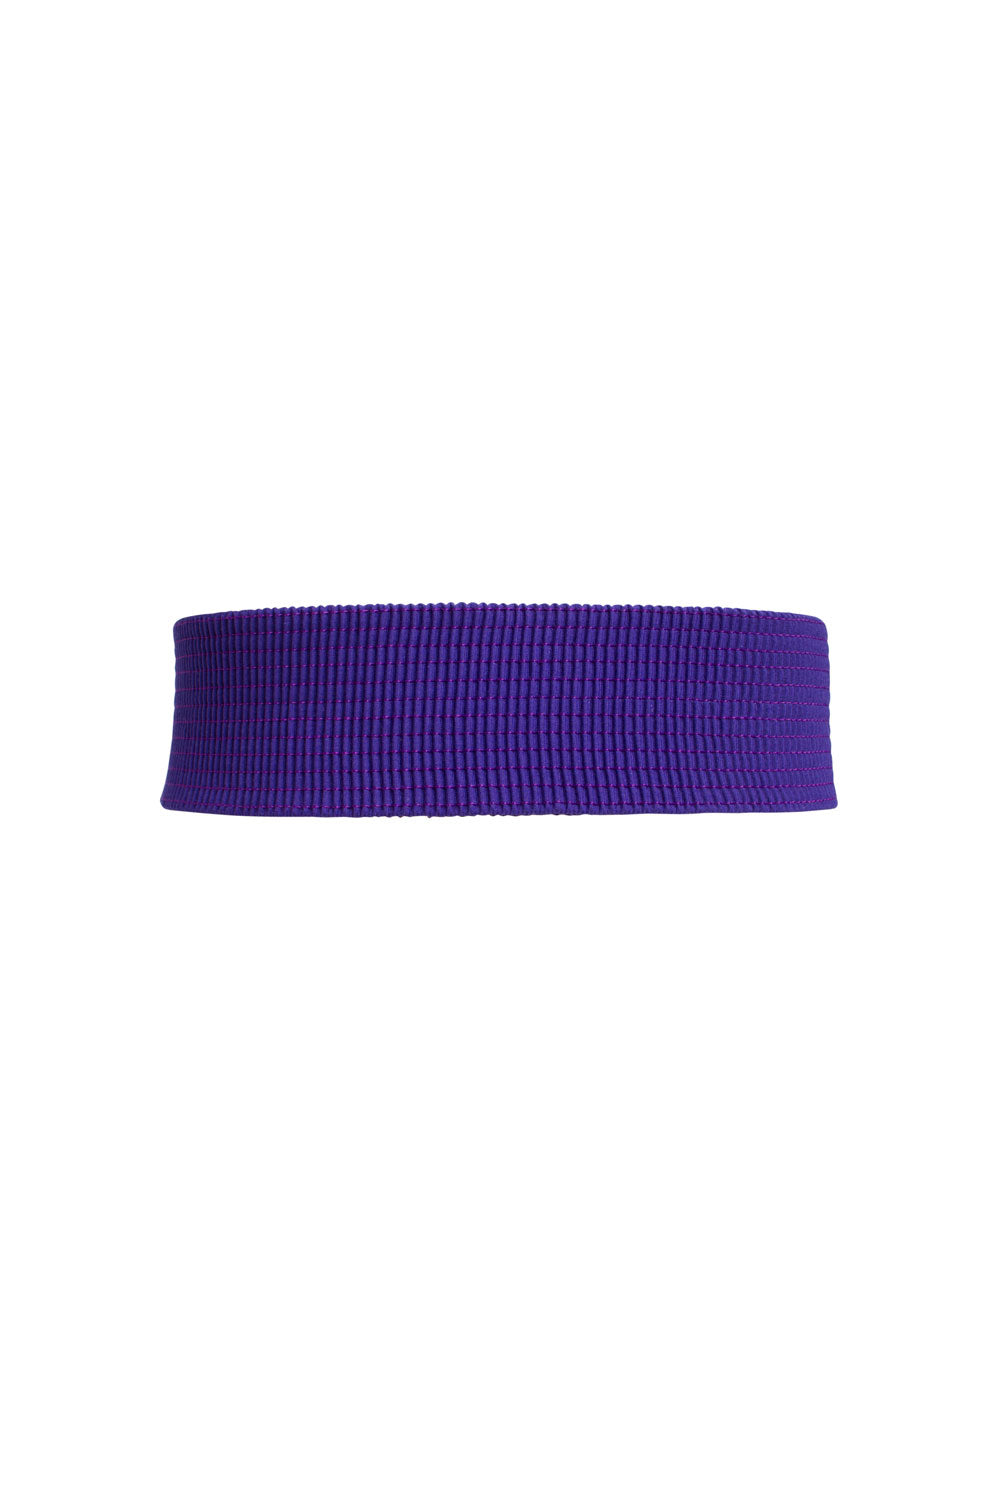 Lock It In Vintage Inspired Stretch Belt in Royal Purple